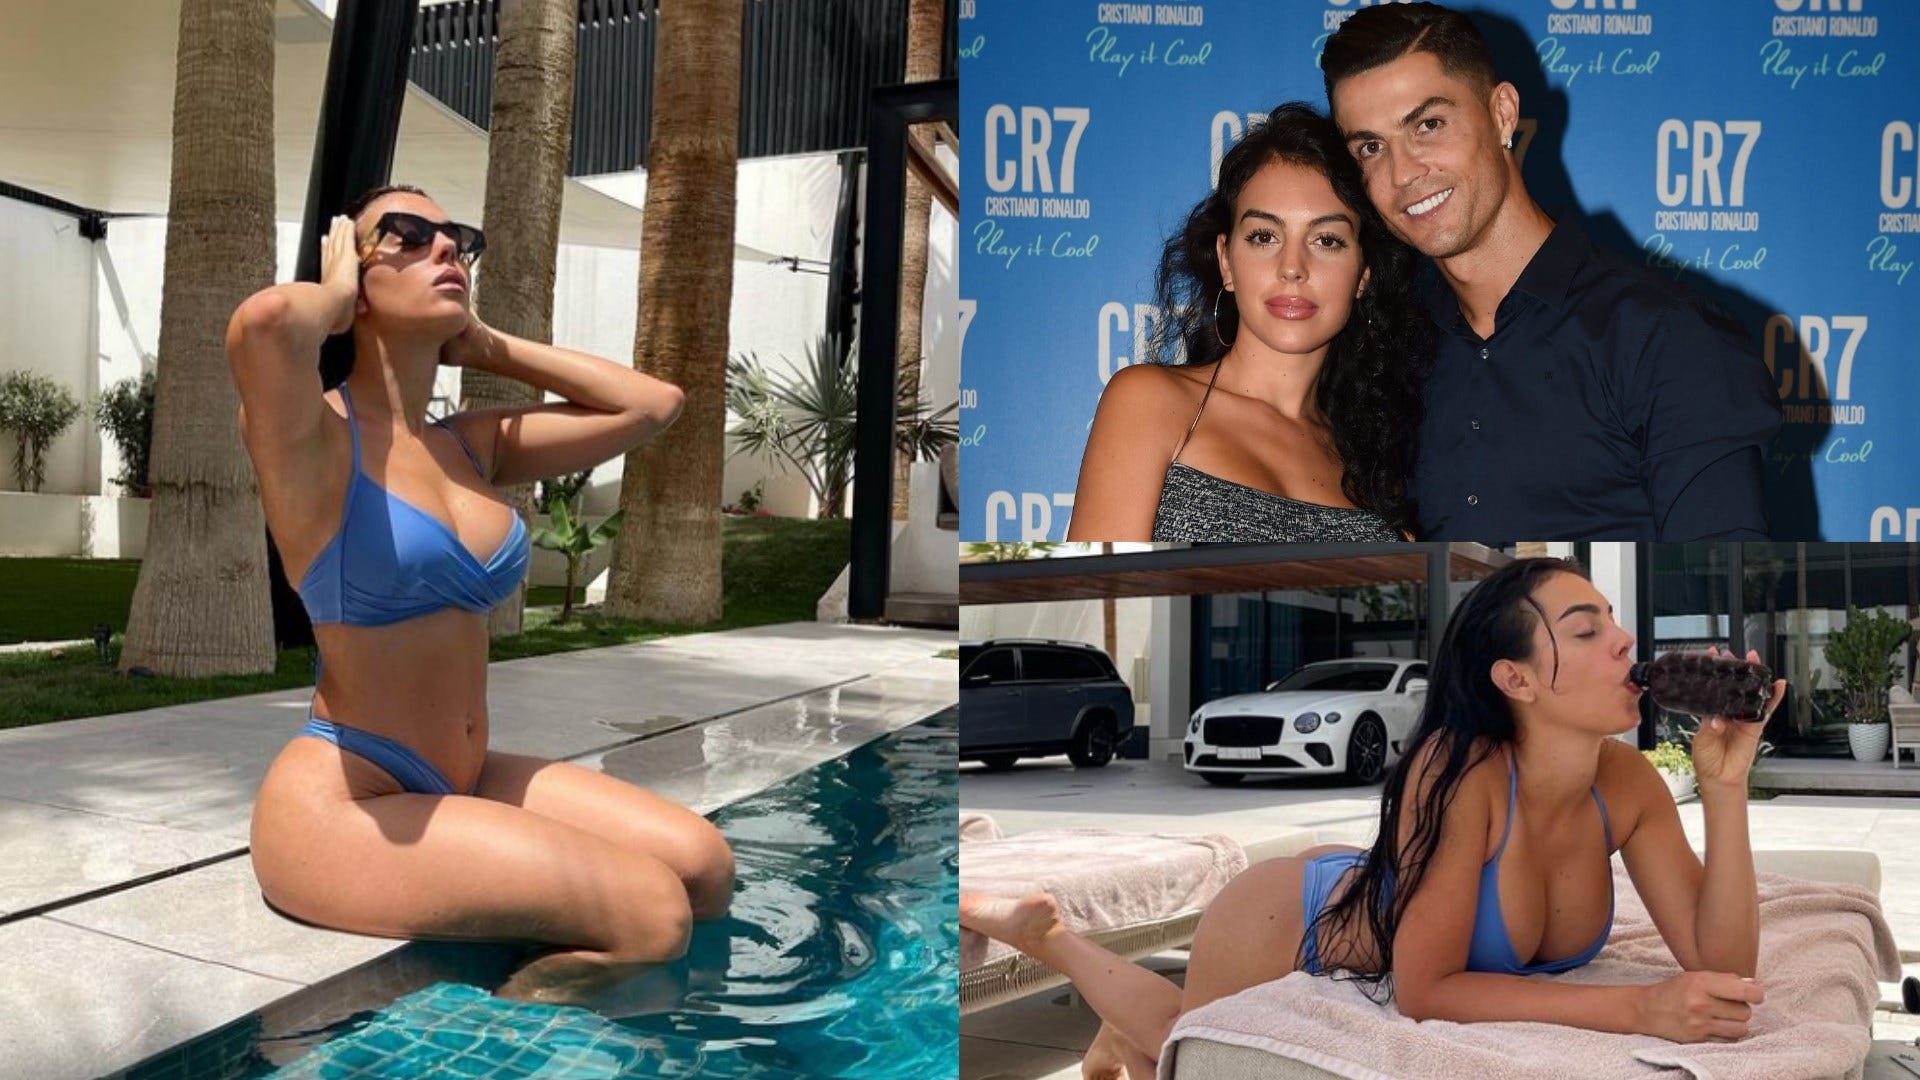 Cristiano Ronaldos girlfriend Georgina Rodriguez posts racy bikini pictures on Instagram as she risks breaking strict Saudi Arabian law Goal US